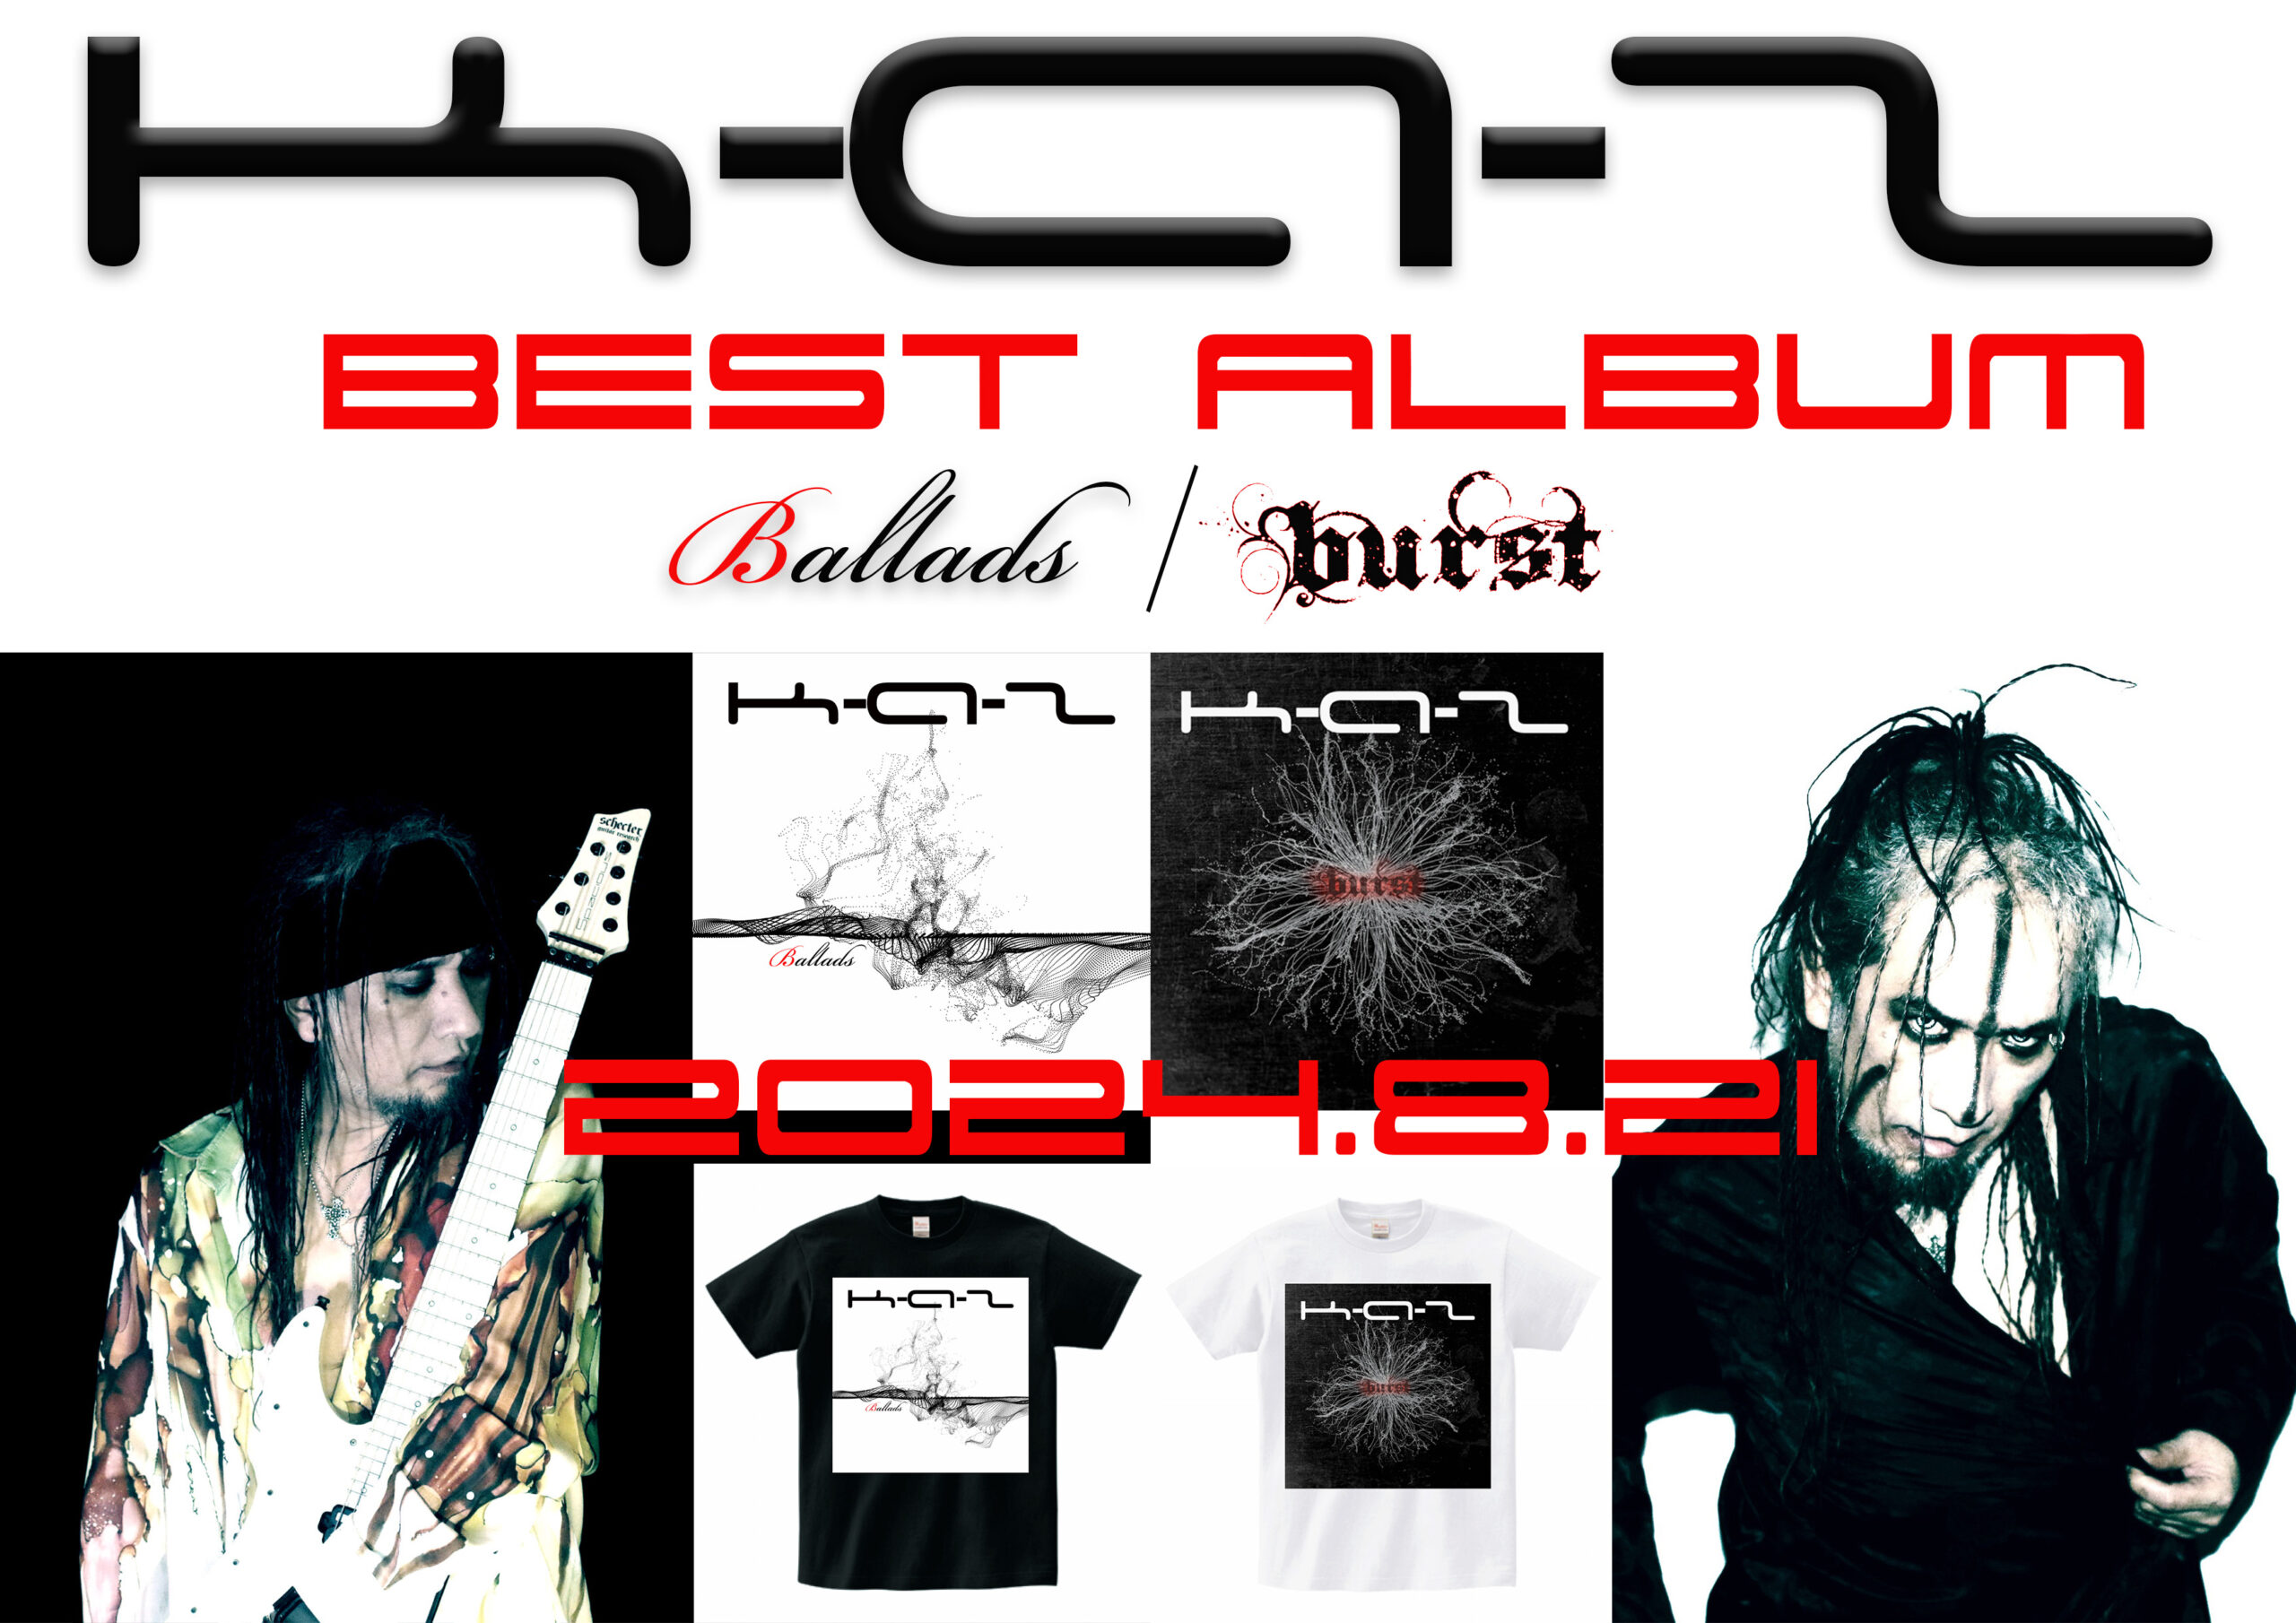 K-A-Z BEST ALBUM “Ballads” “burst” | LOUDER THAN RECORDS / K-A-Z OFFICIAL  STORE